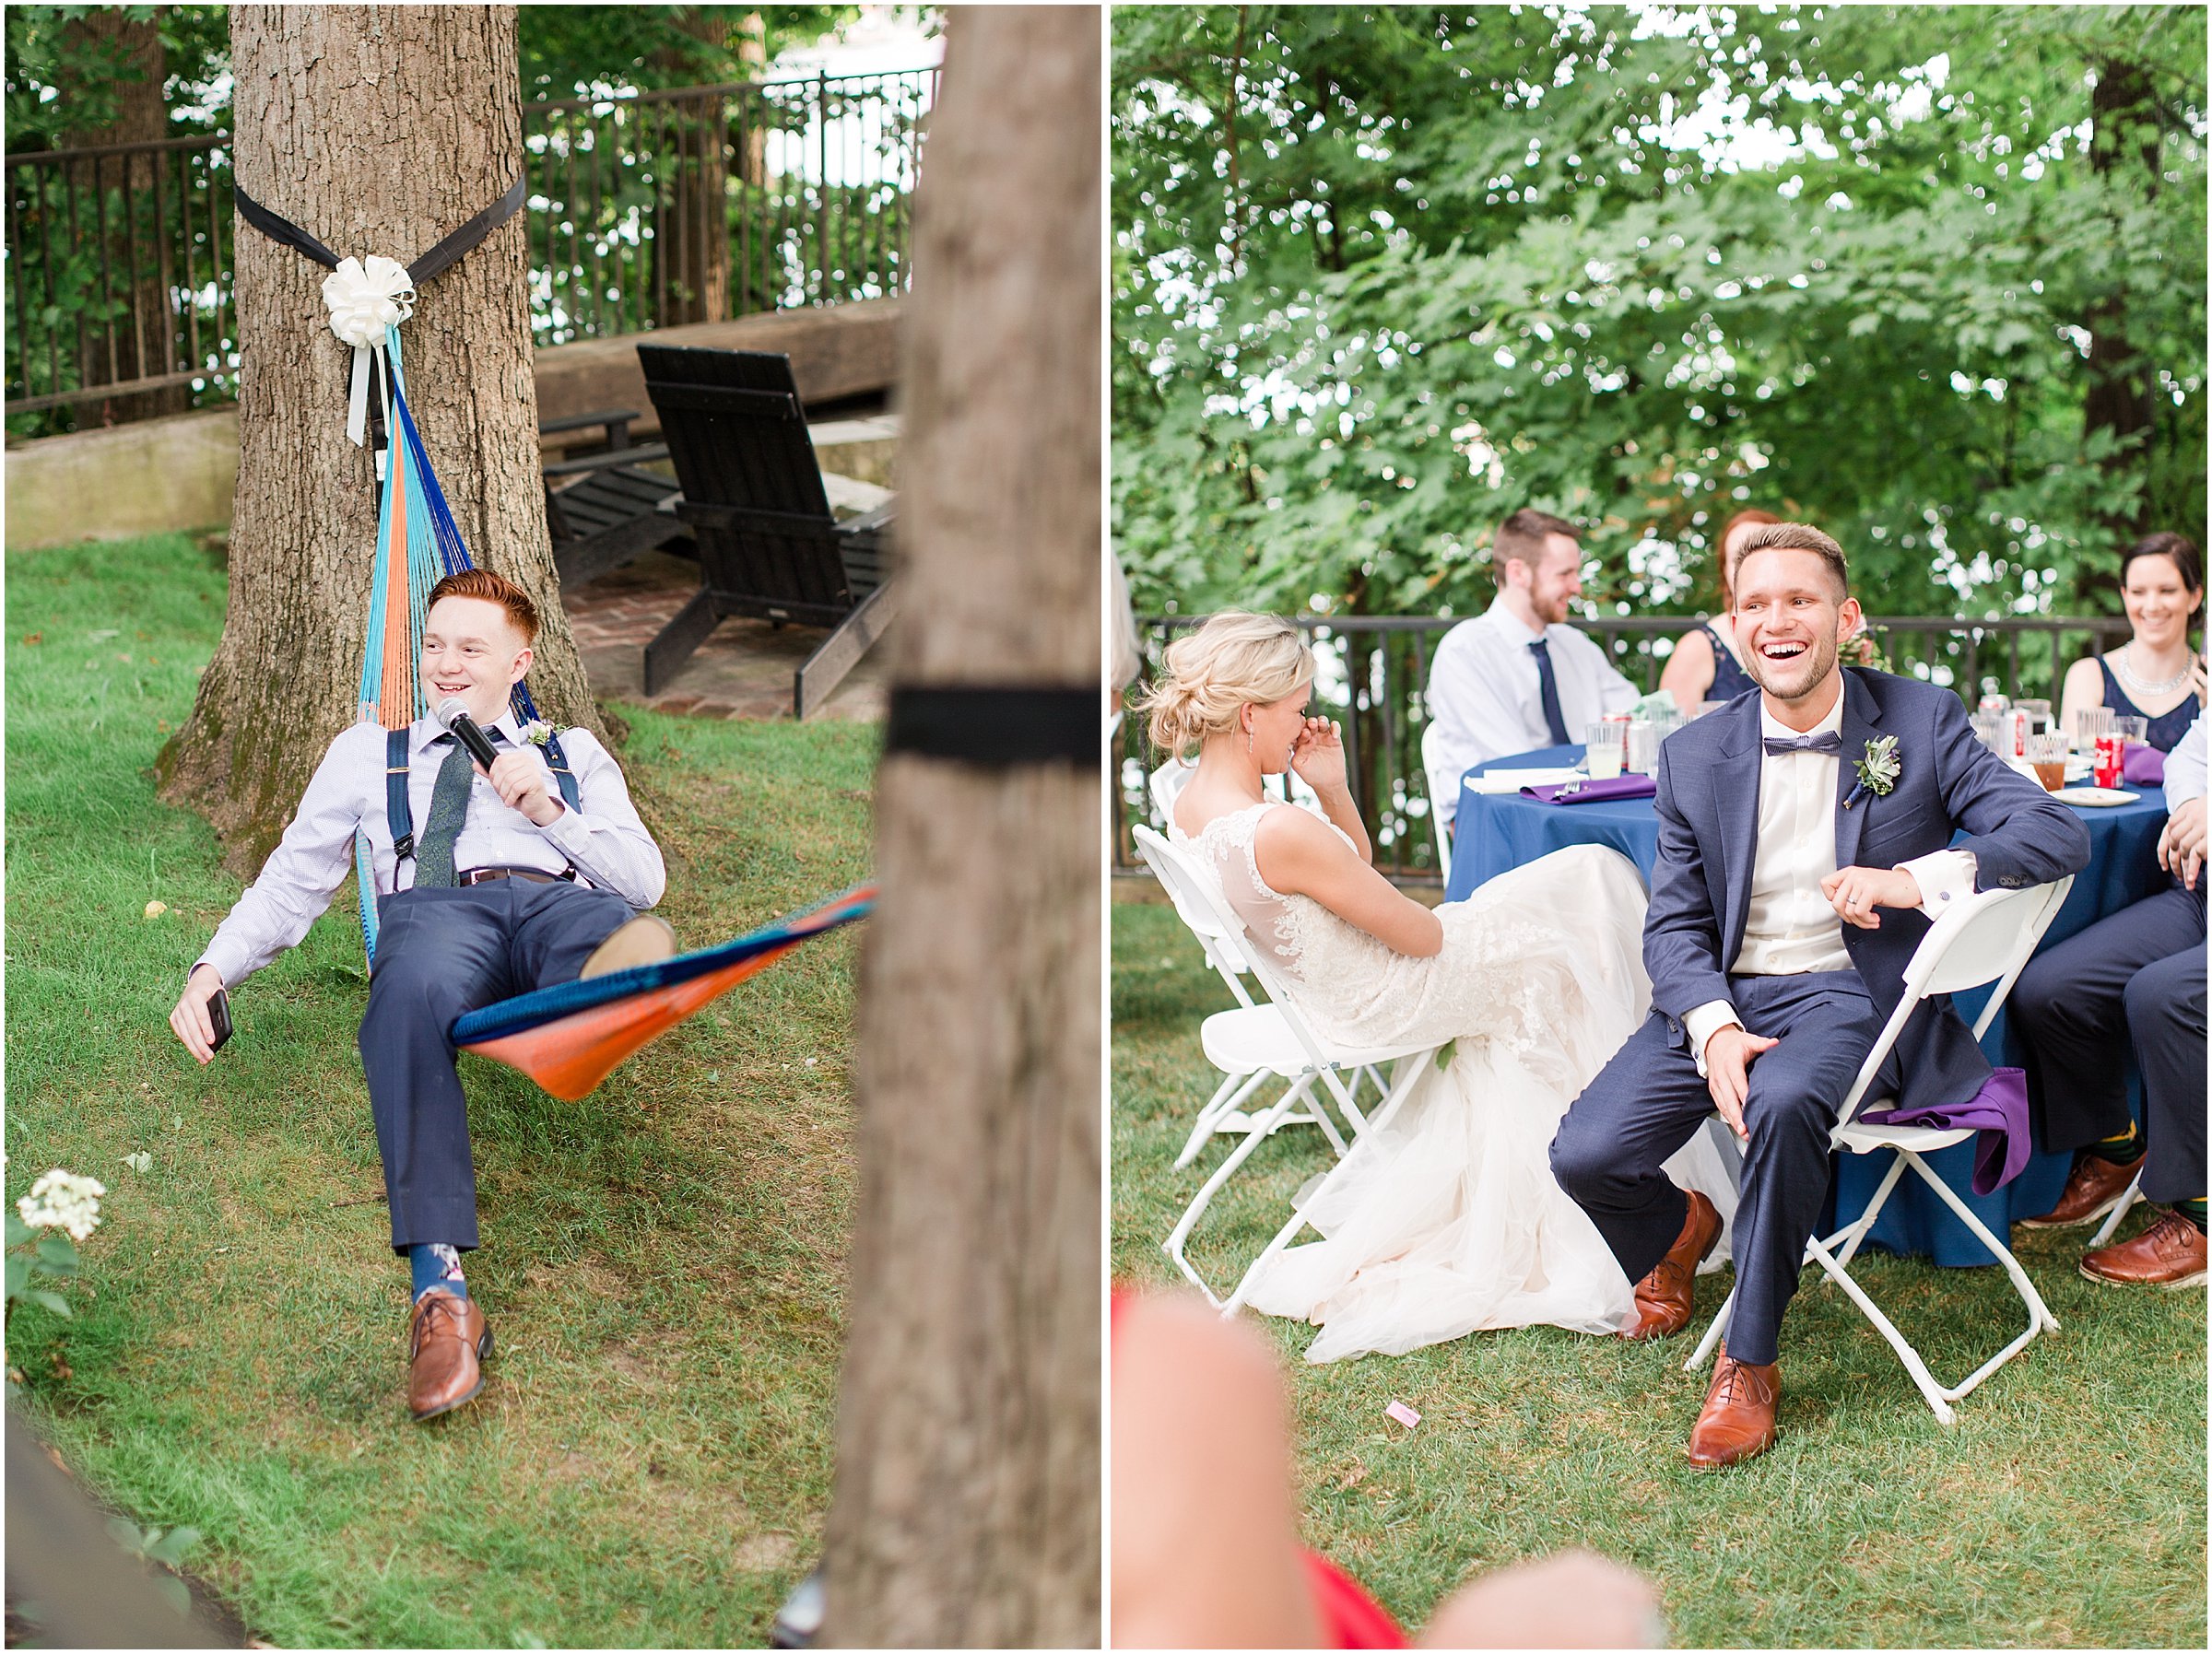 An Intimate Indianapolis Backyard Wedding